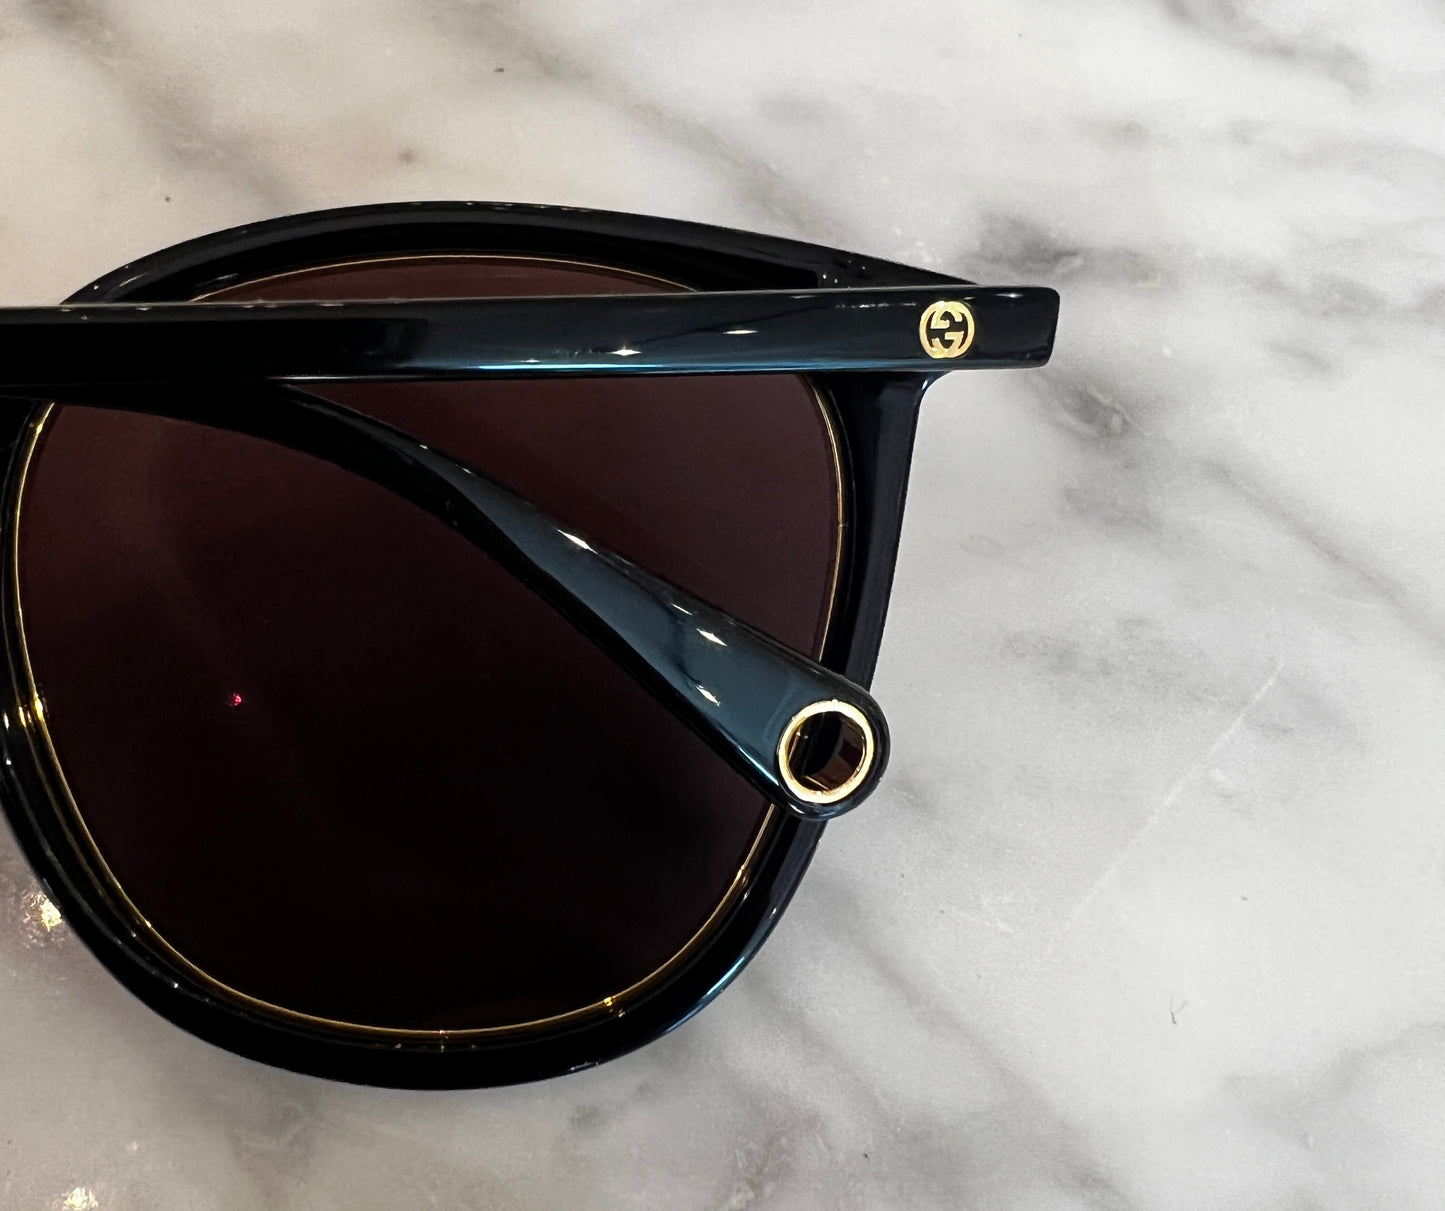 Gucci Gold Circle Sunglasses